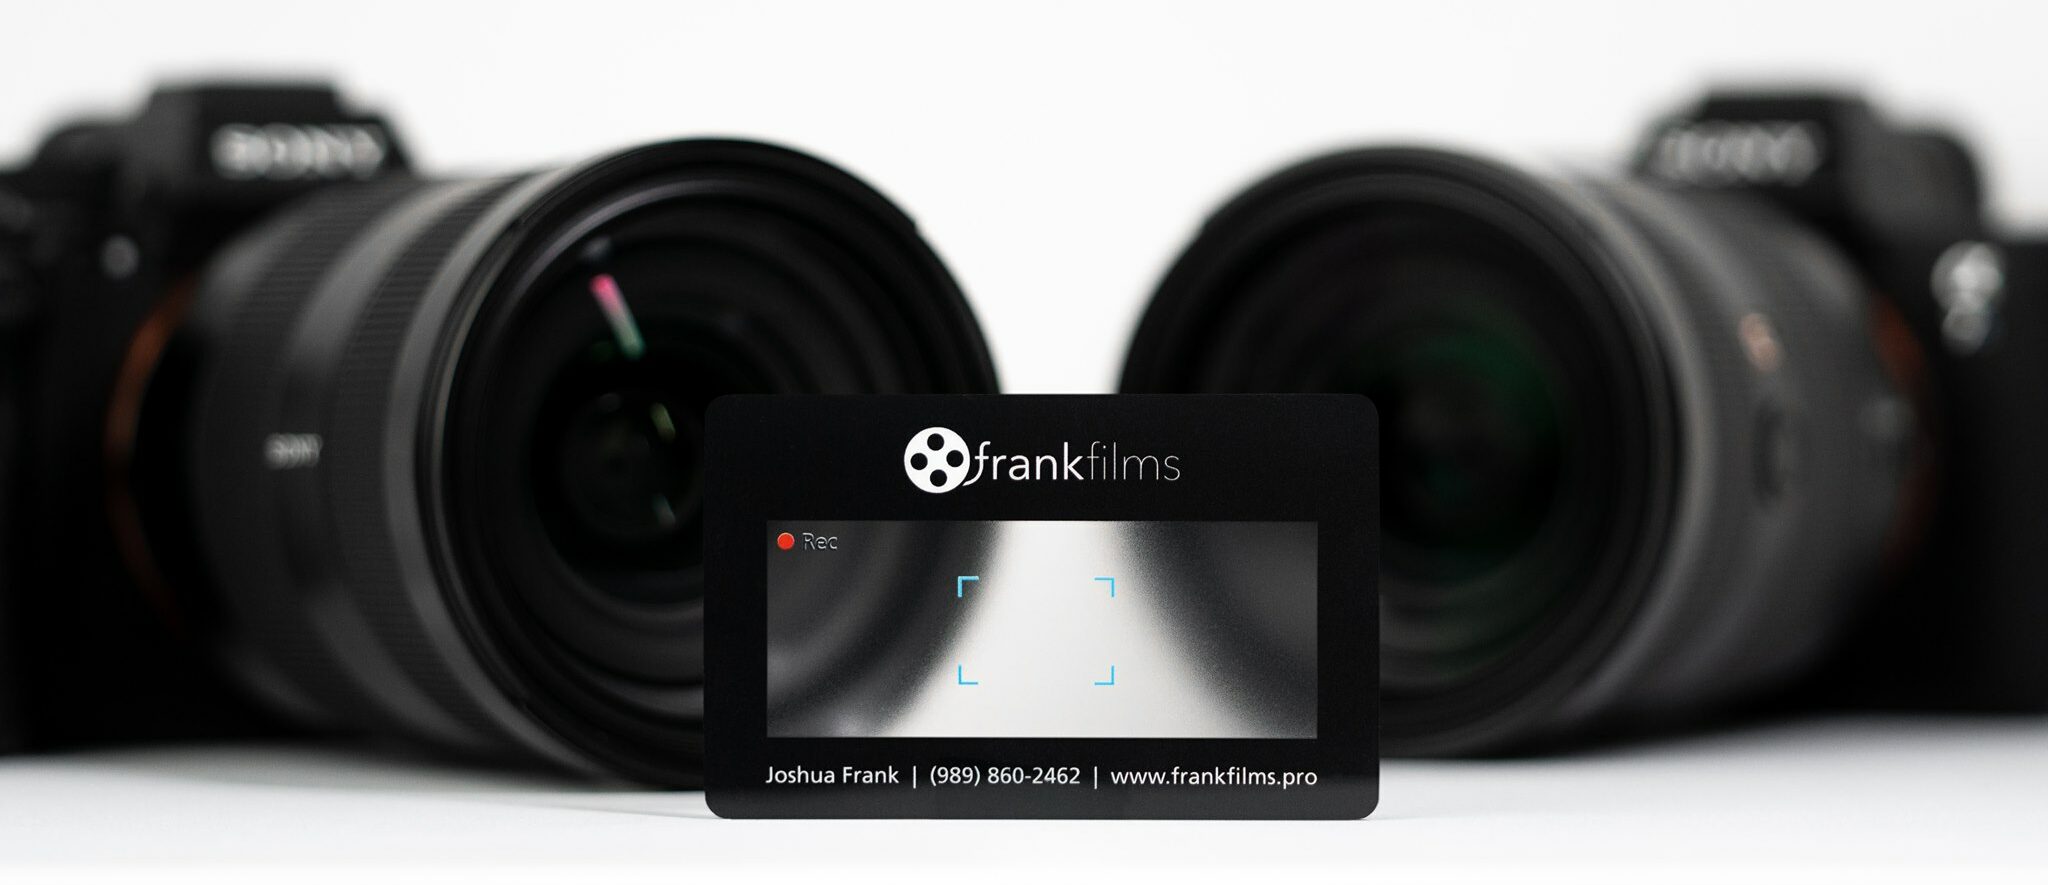 FrankFilms biz card in front of cameras